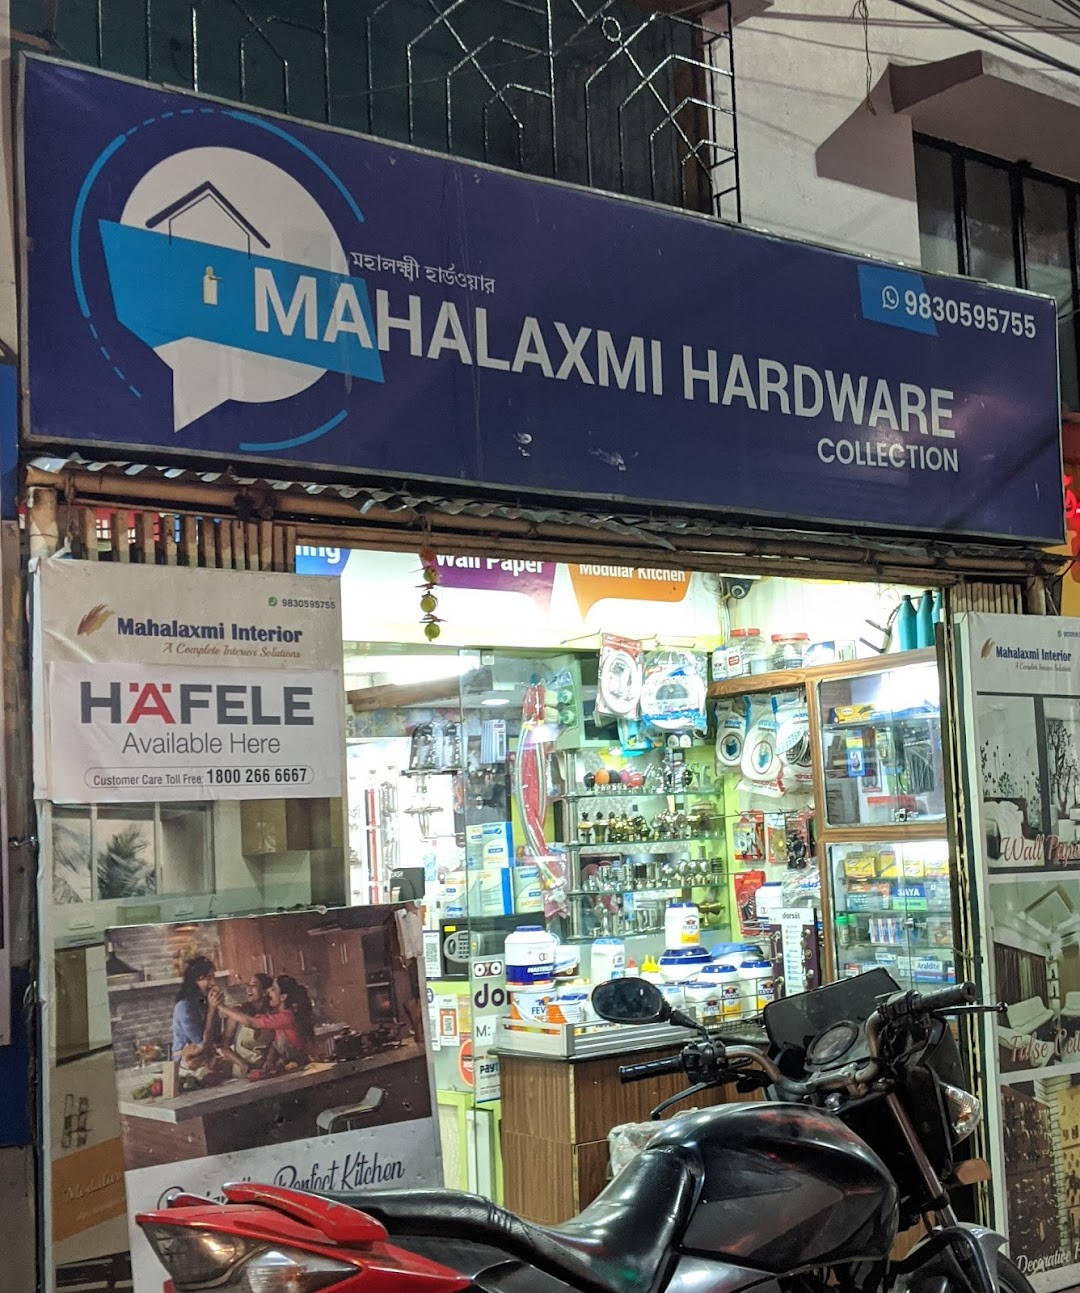 Mahalaxmi Hardware Collection